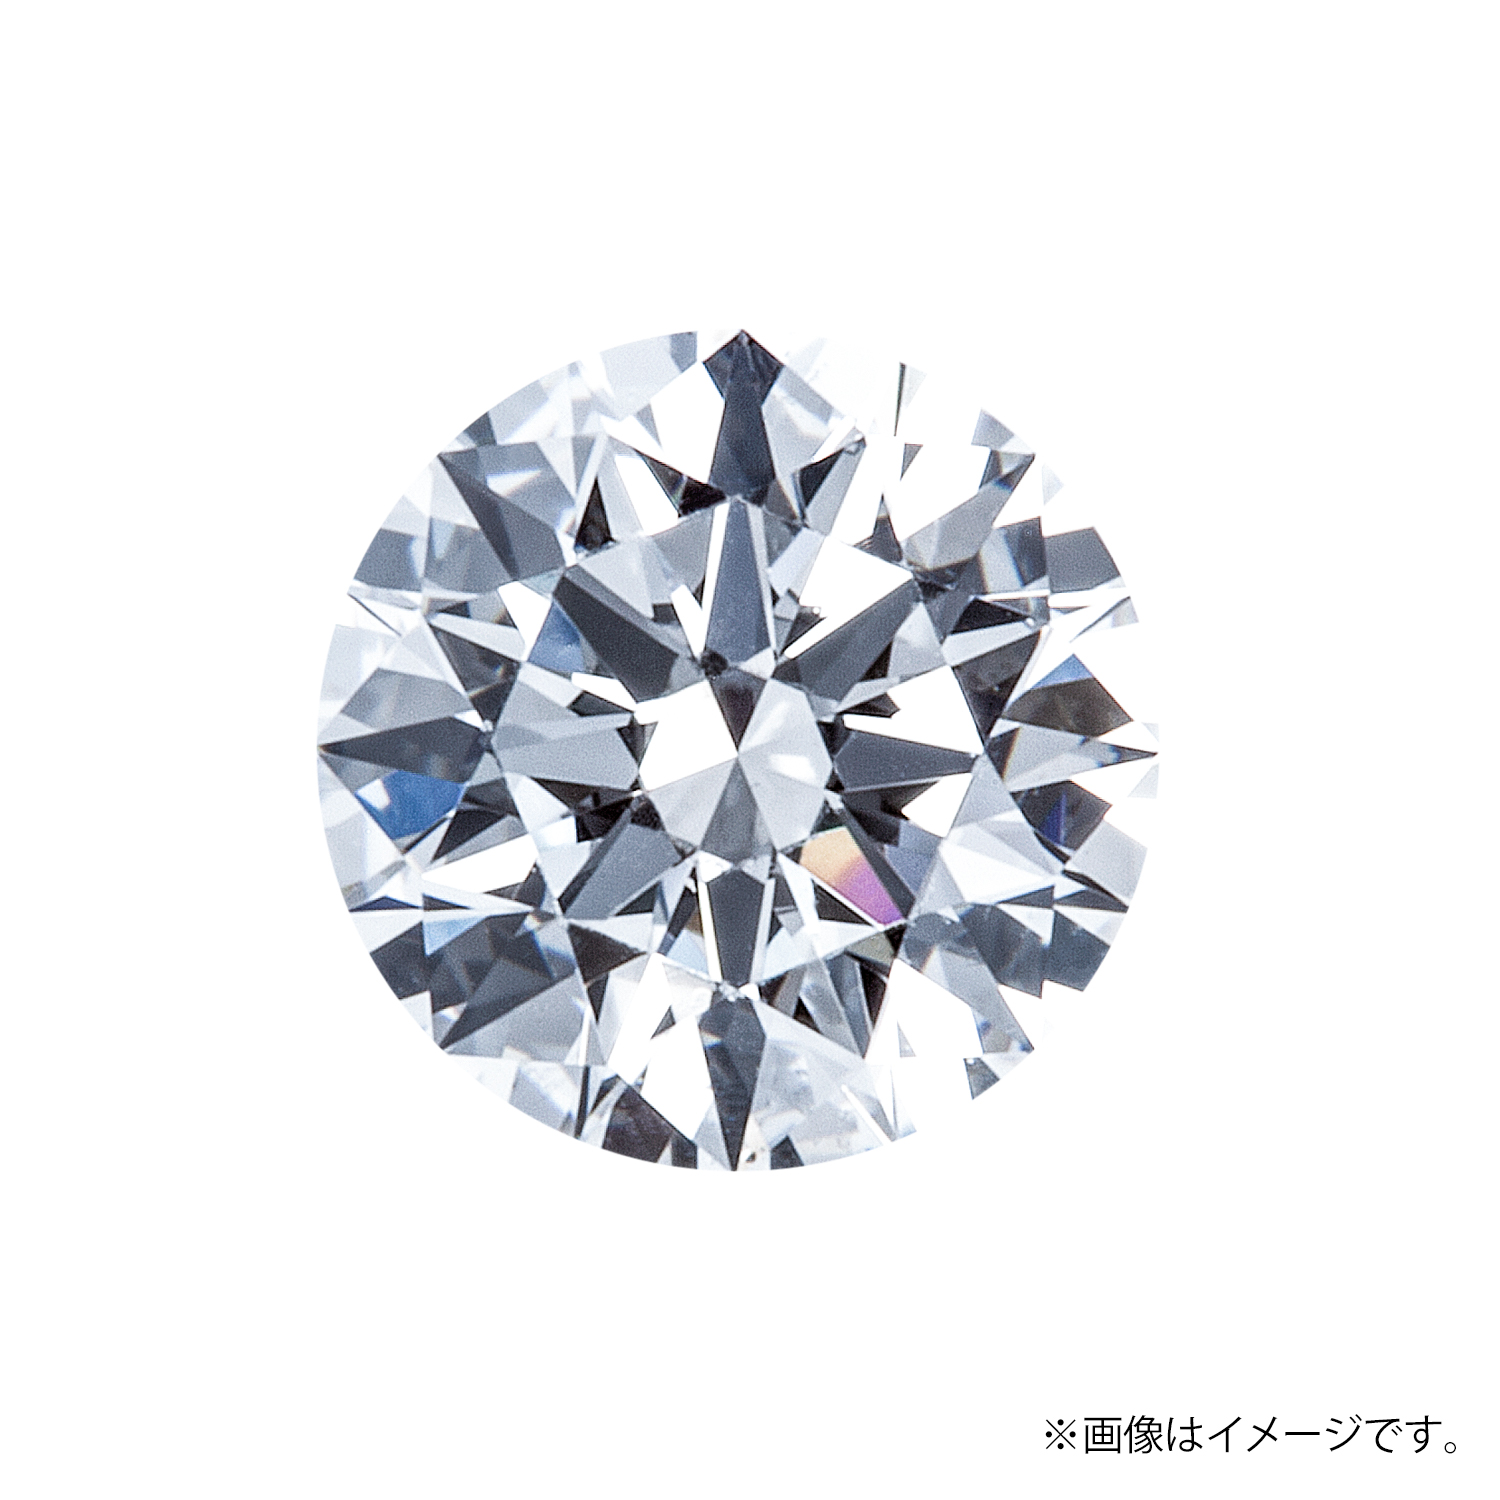 0.204ct Round ダイヤモンド / Ⅾ / SI1 / 3EX H&C